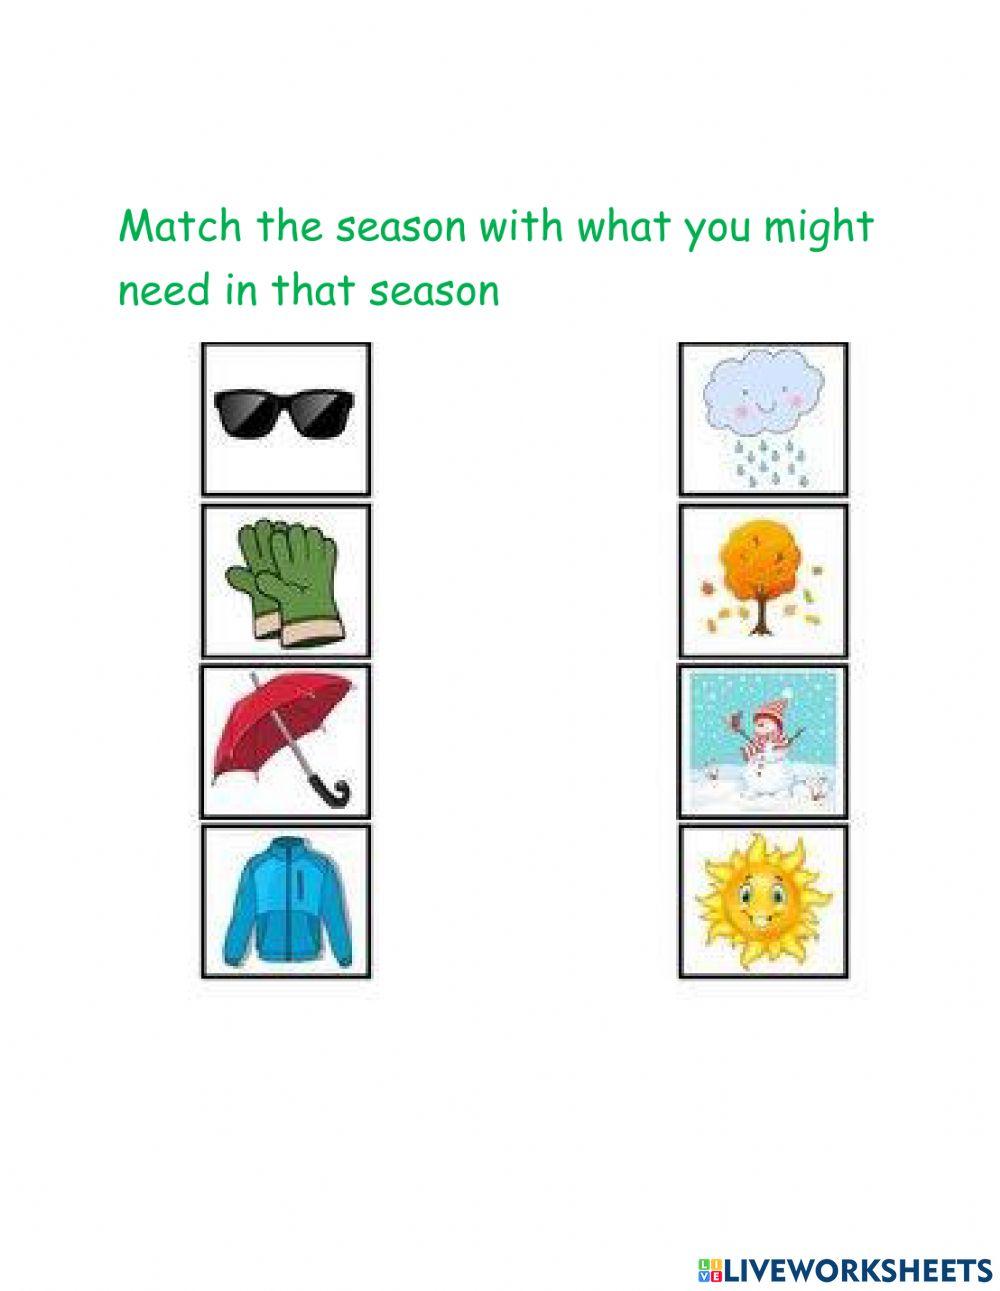 Why seasons happen